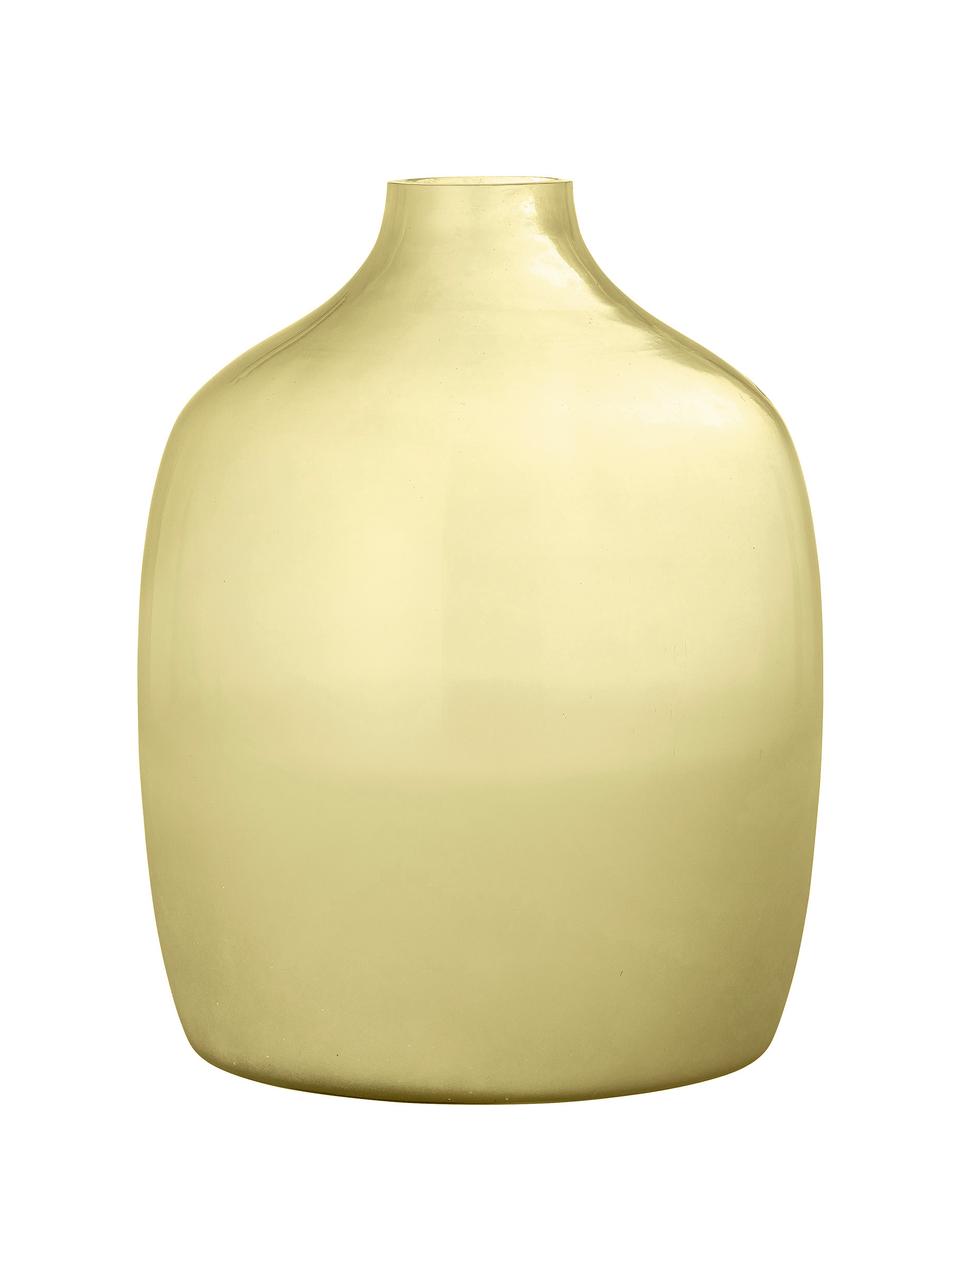 Glazen vaas Idima in geel, Glas, Geel, transparant, Ø 24 x H 30 cm